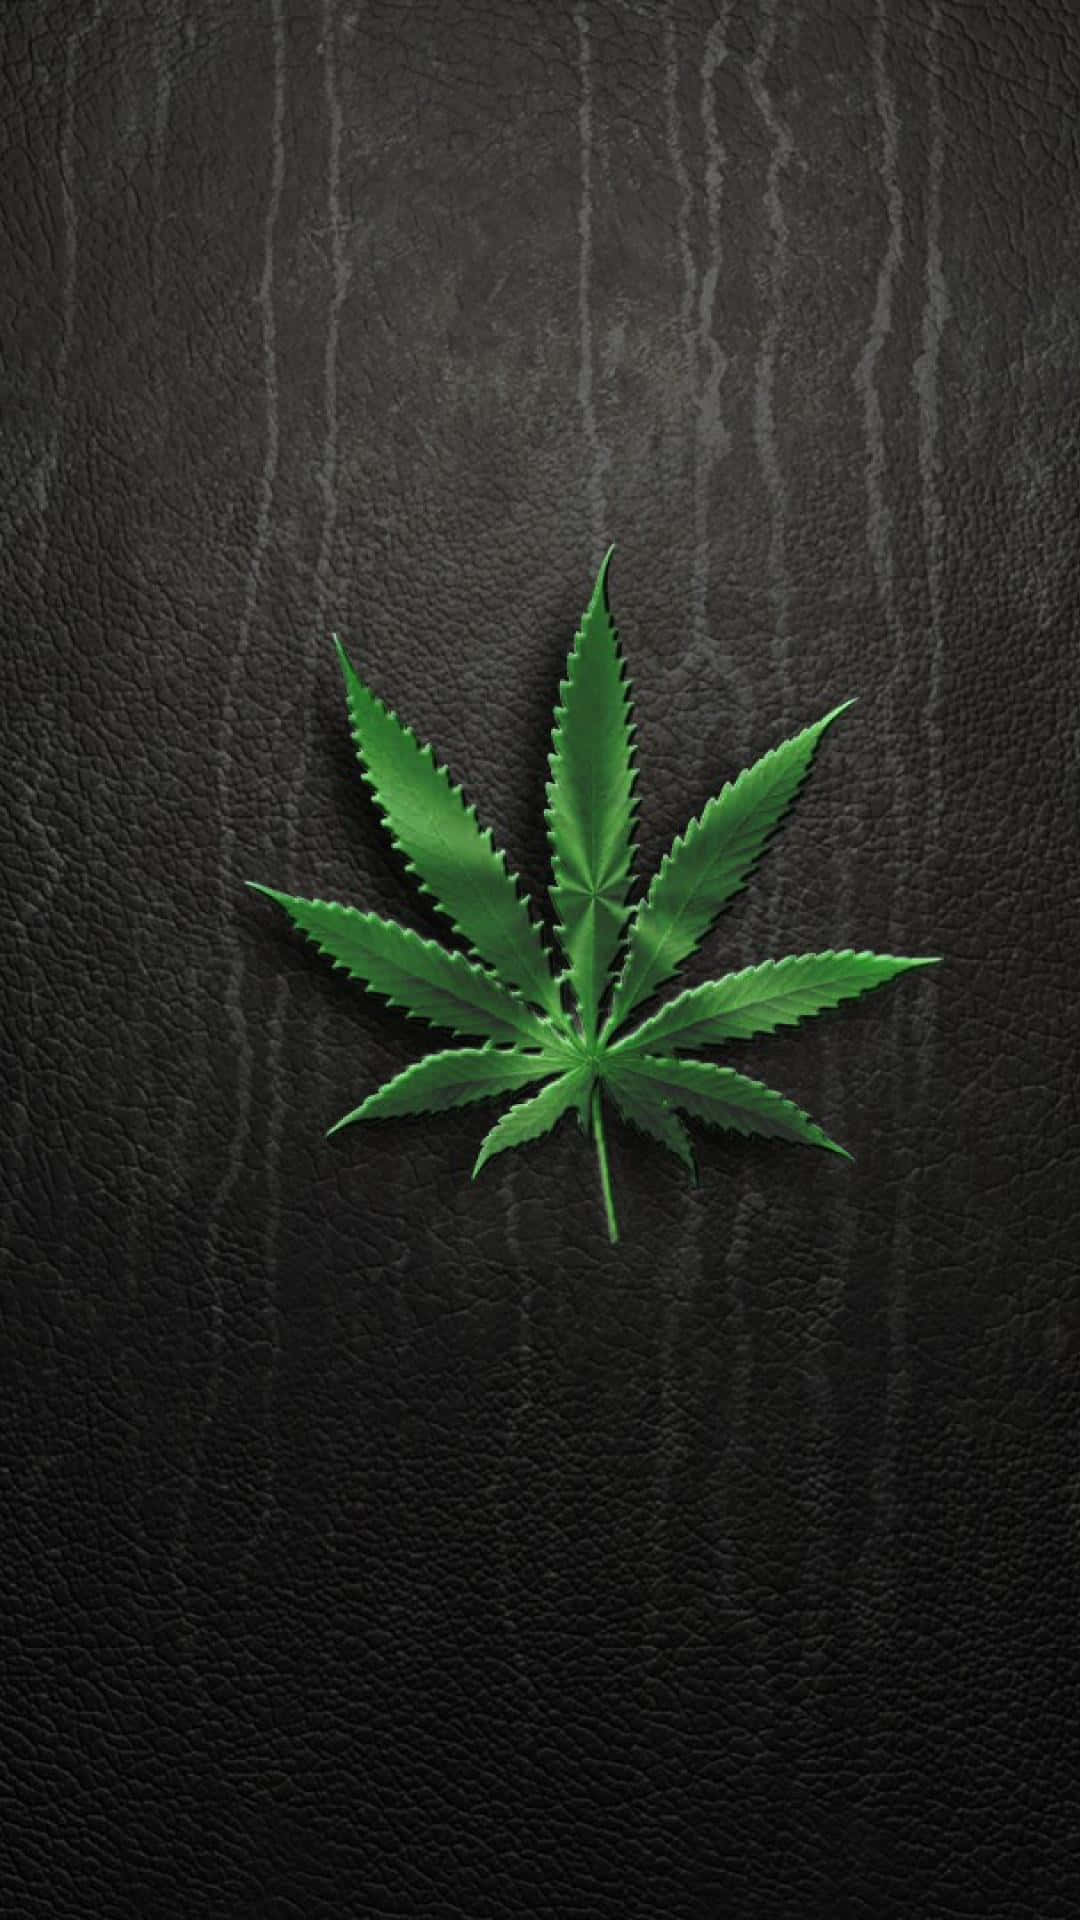 Enjoy the green of cannabis